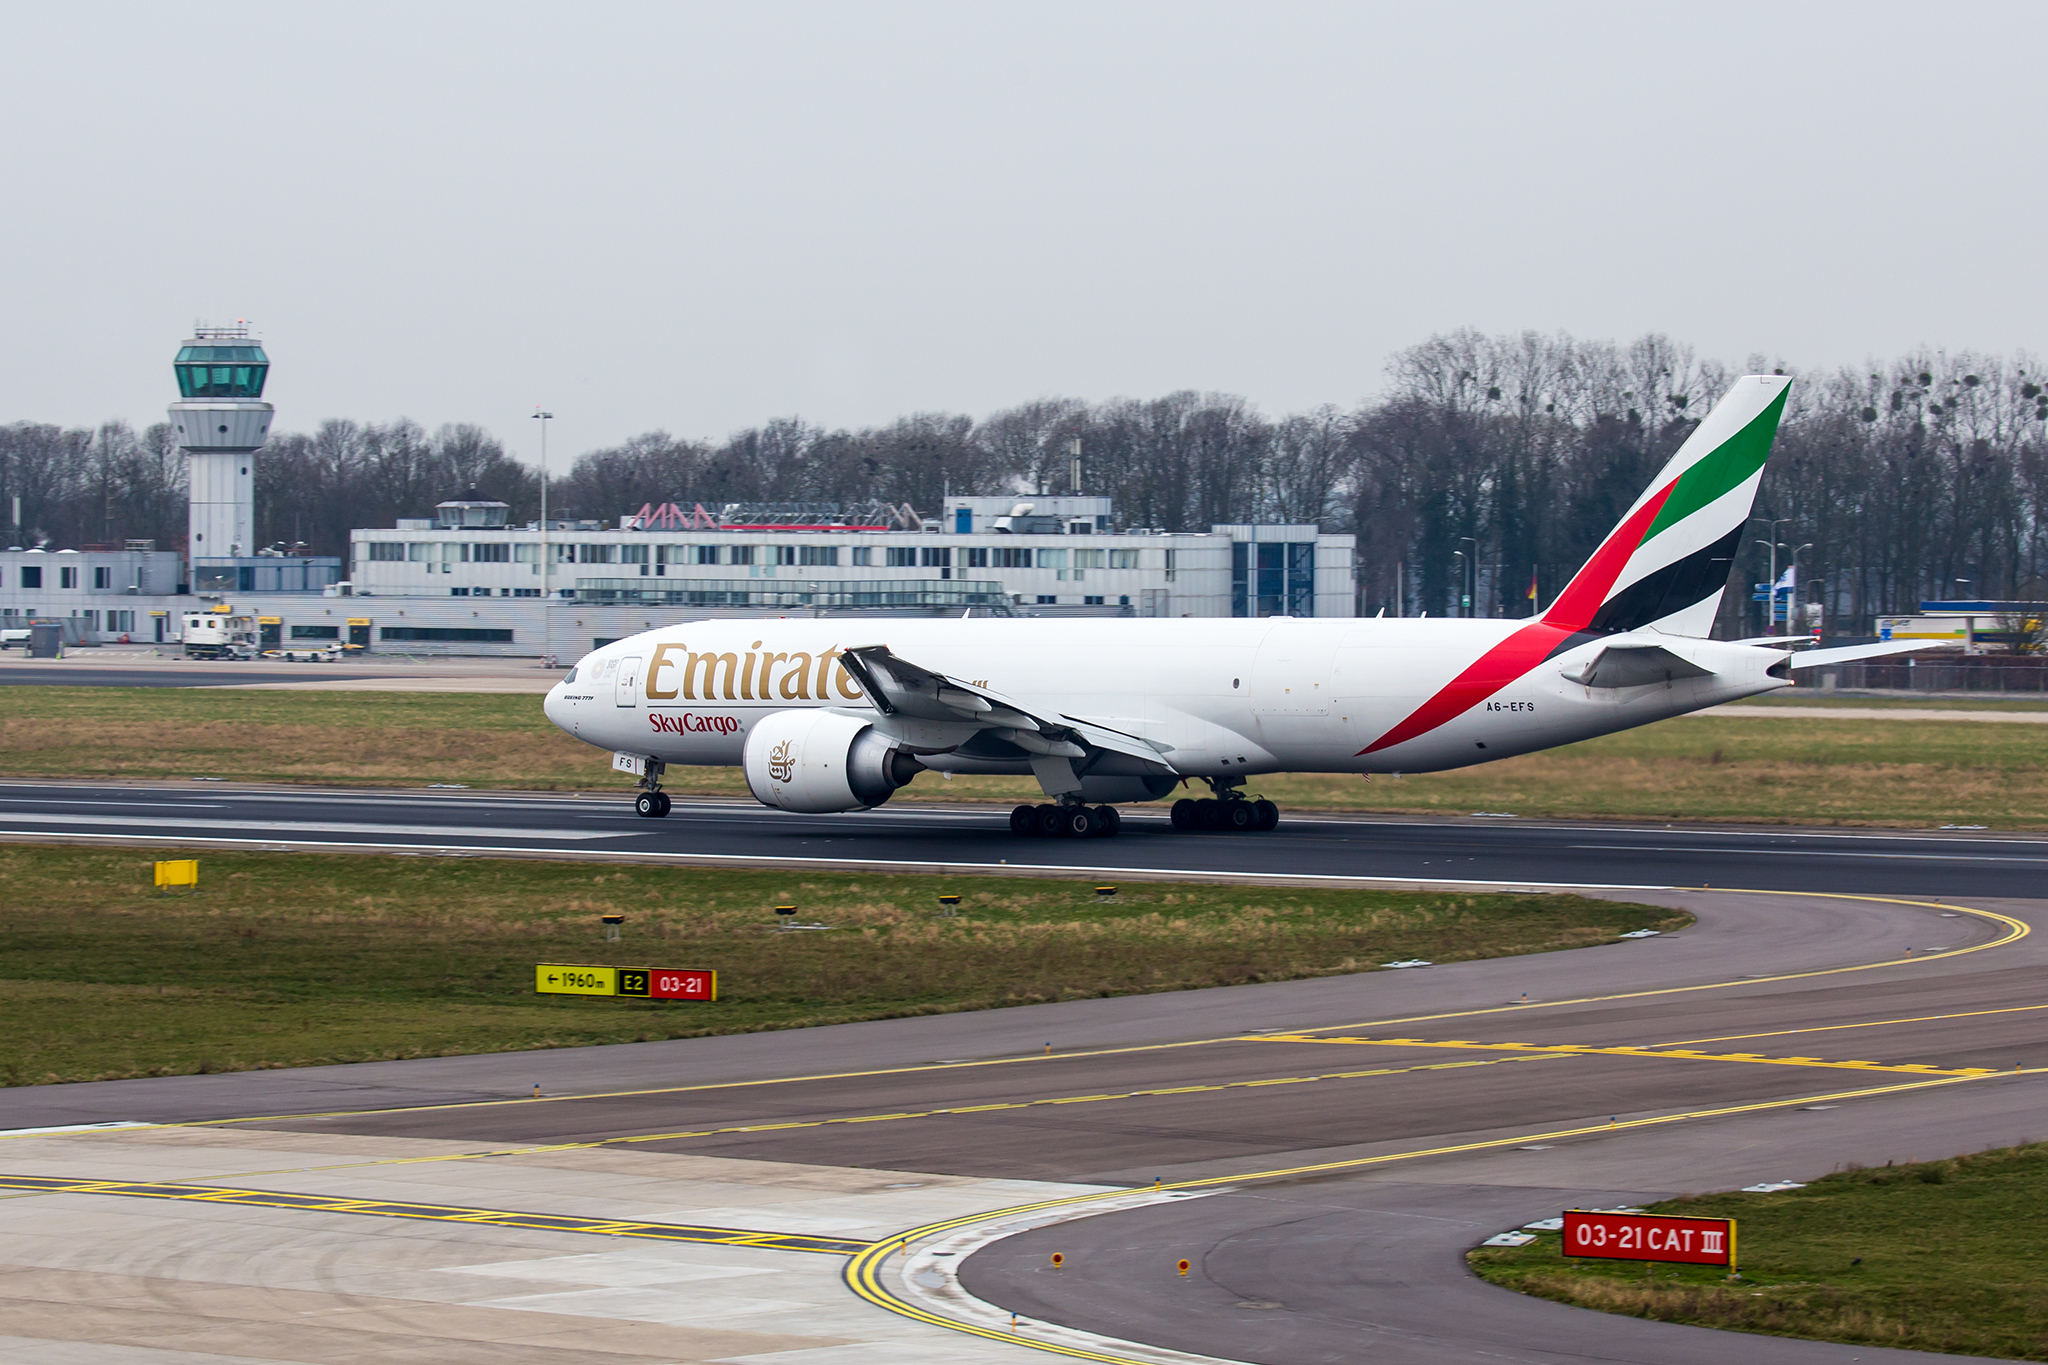 Emirates SkyCargo launches freighter services-to Maastricht, courtesy of Emirates SkyCargo